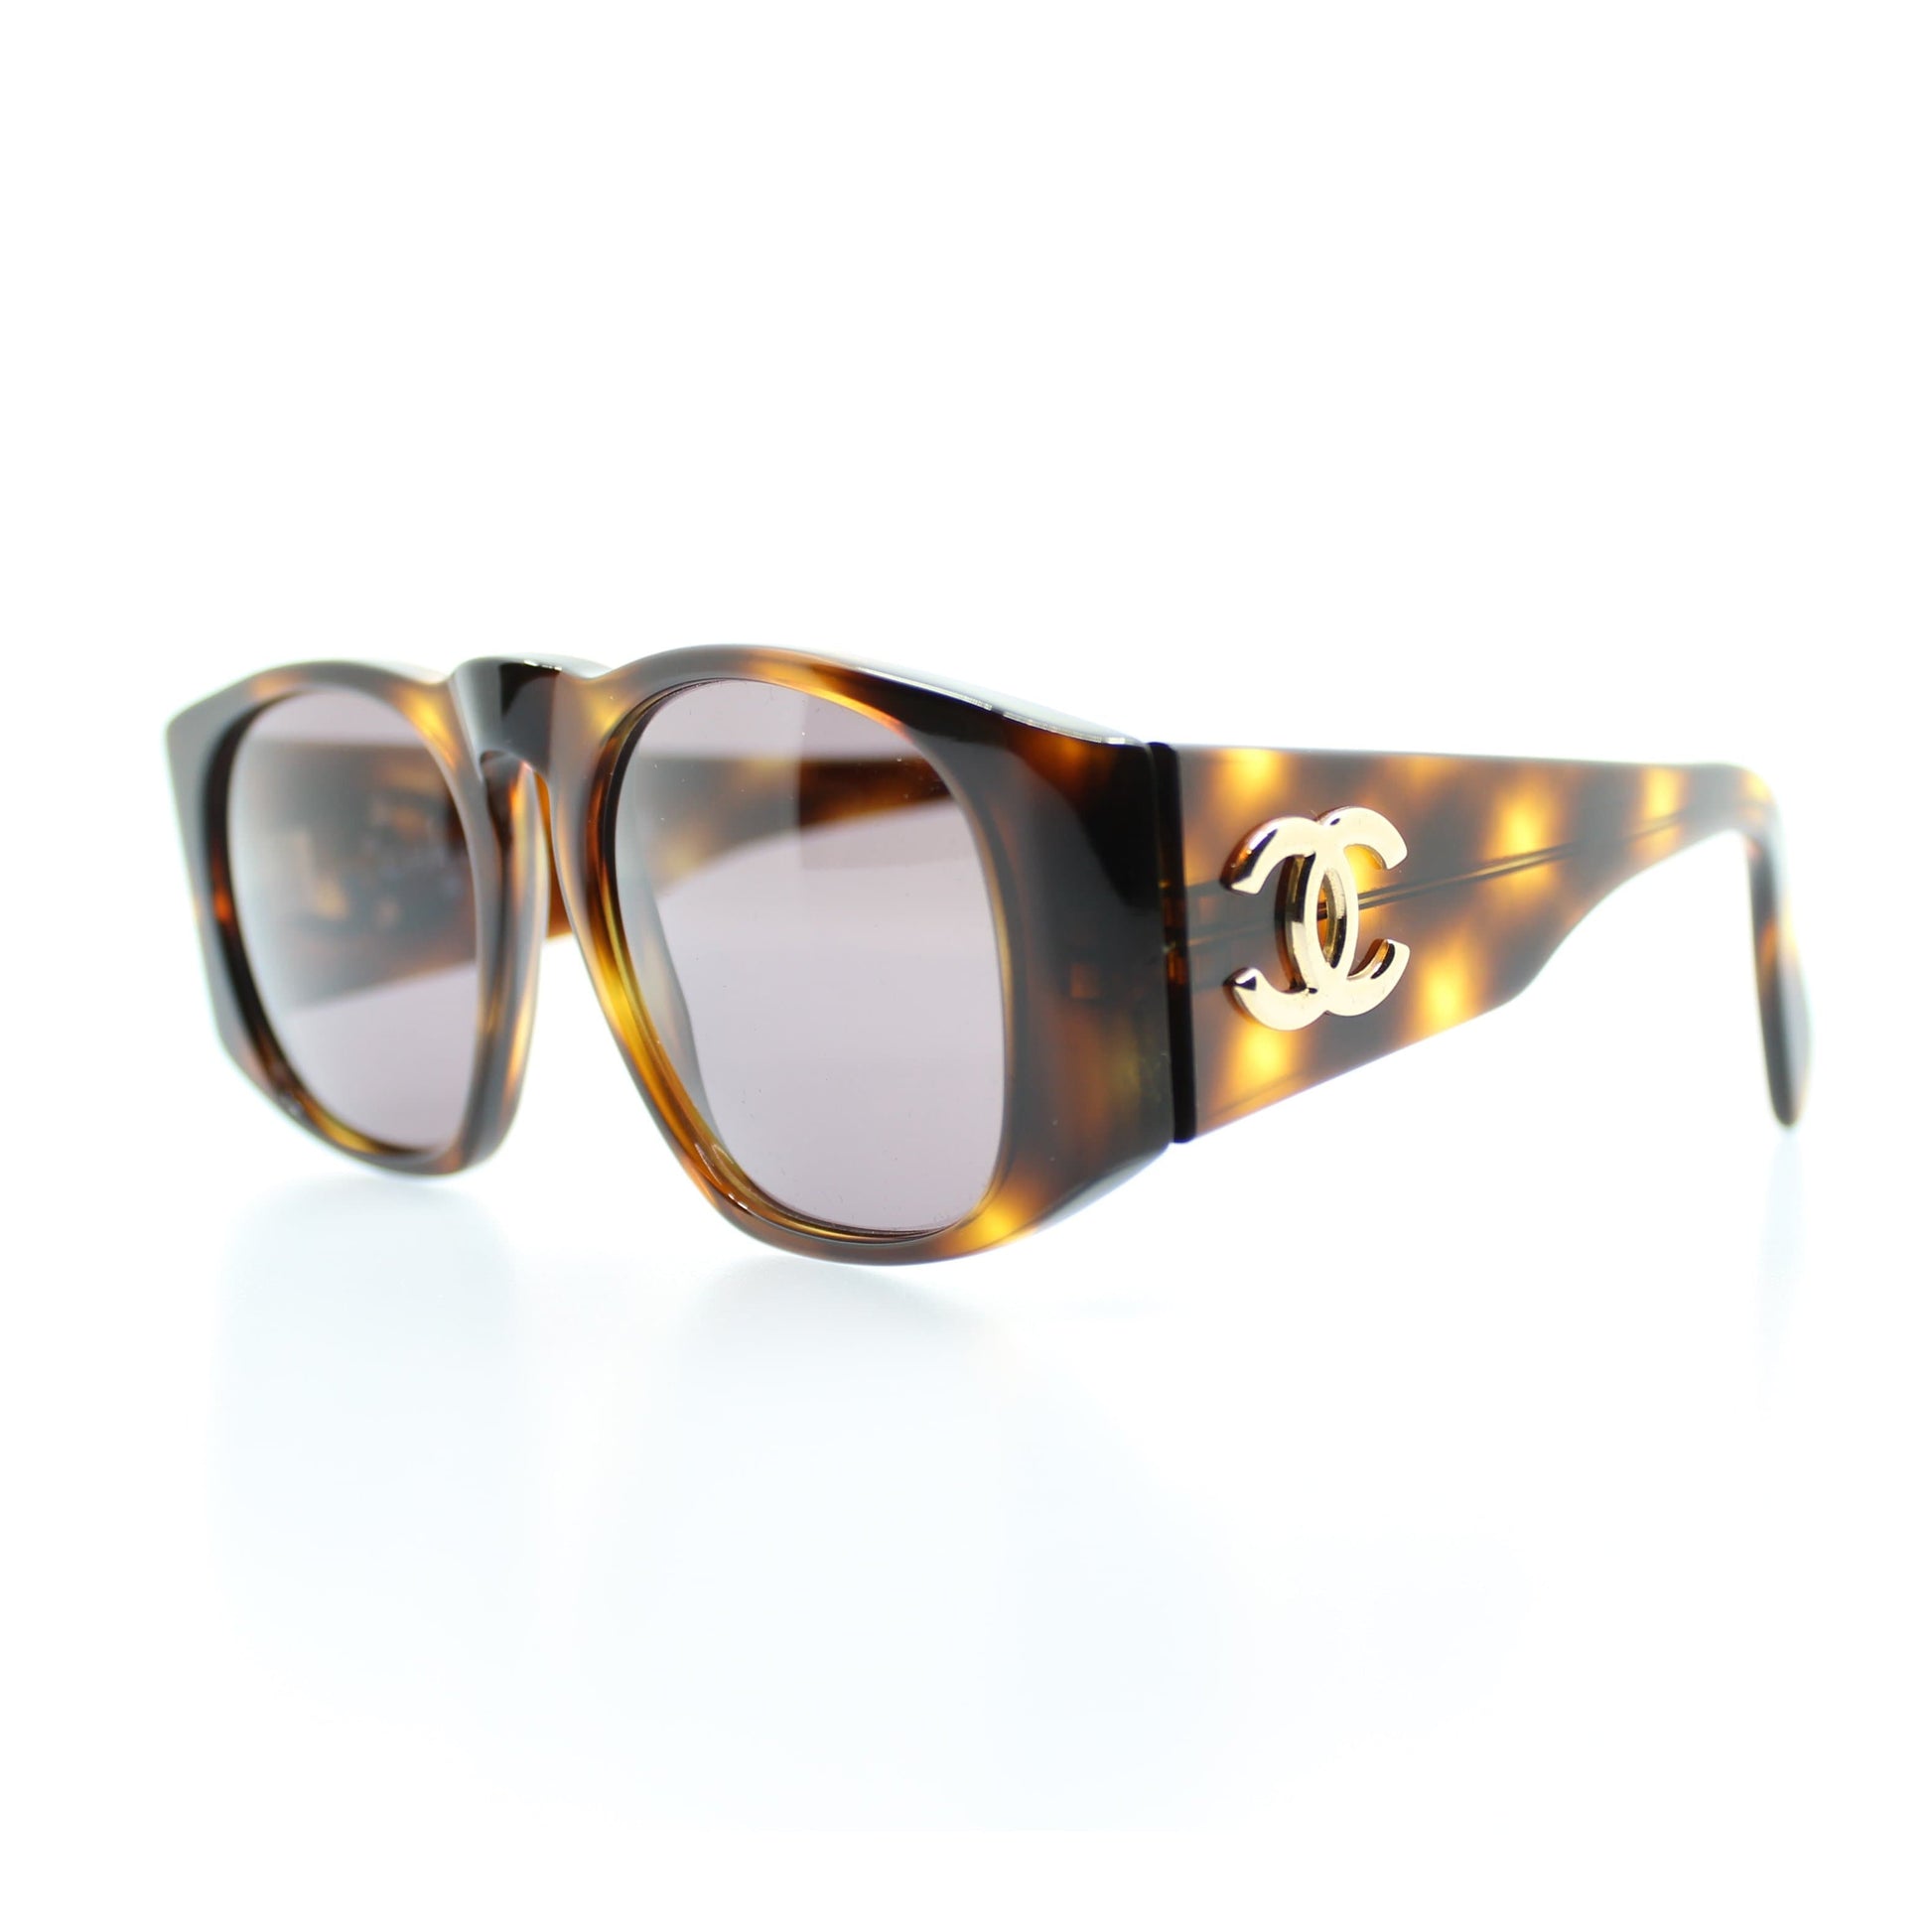 CHANEL Sunglasses Vintage Rare Gold Brown Lens Rectangular